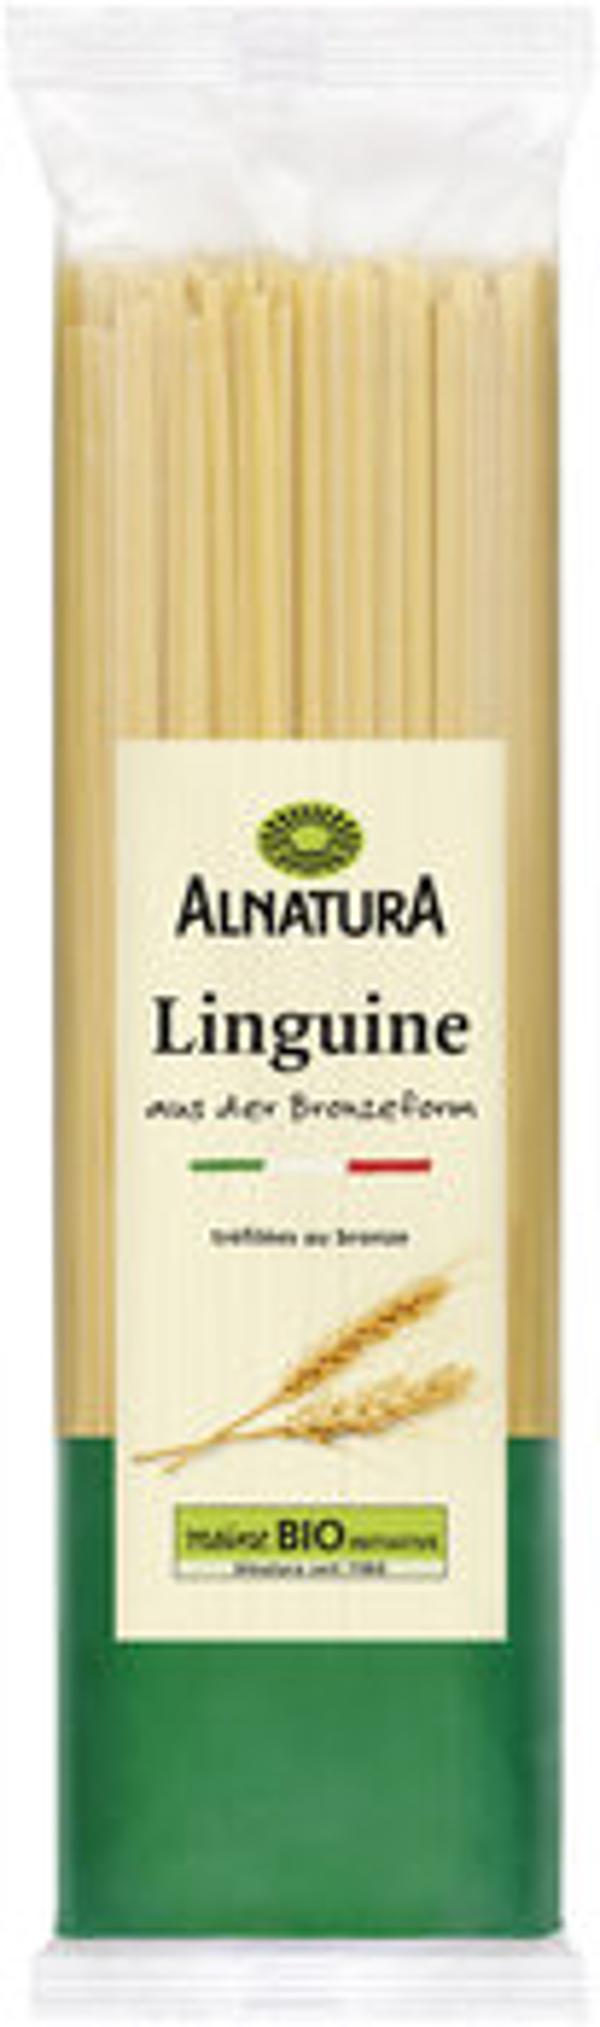 Produktfoto zu Alnatura Linguine 500g